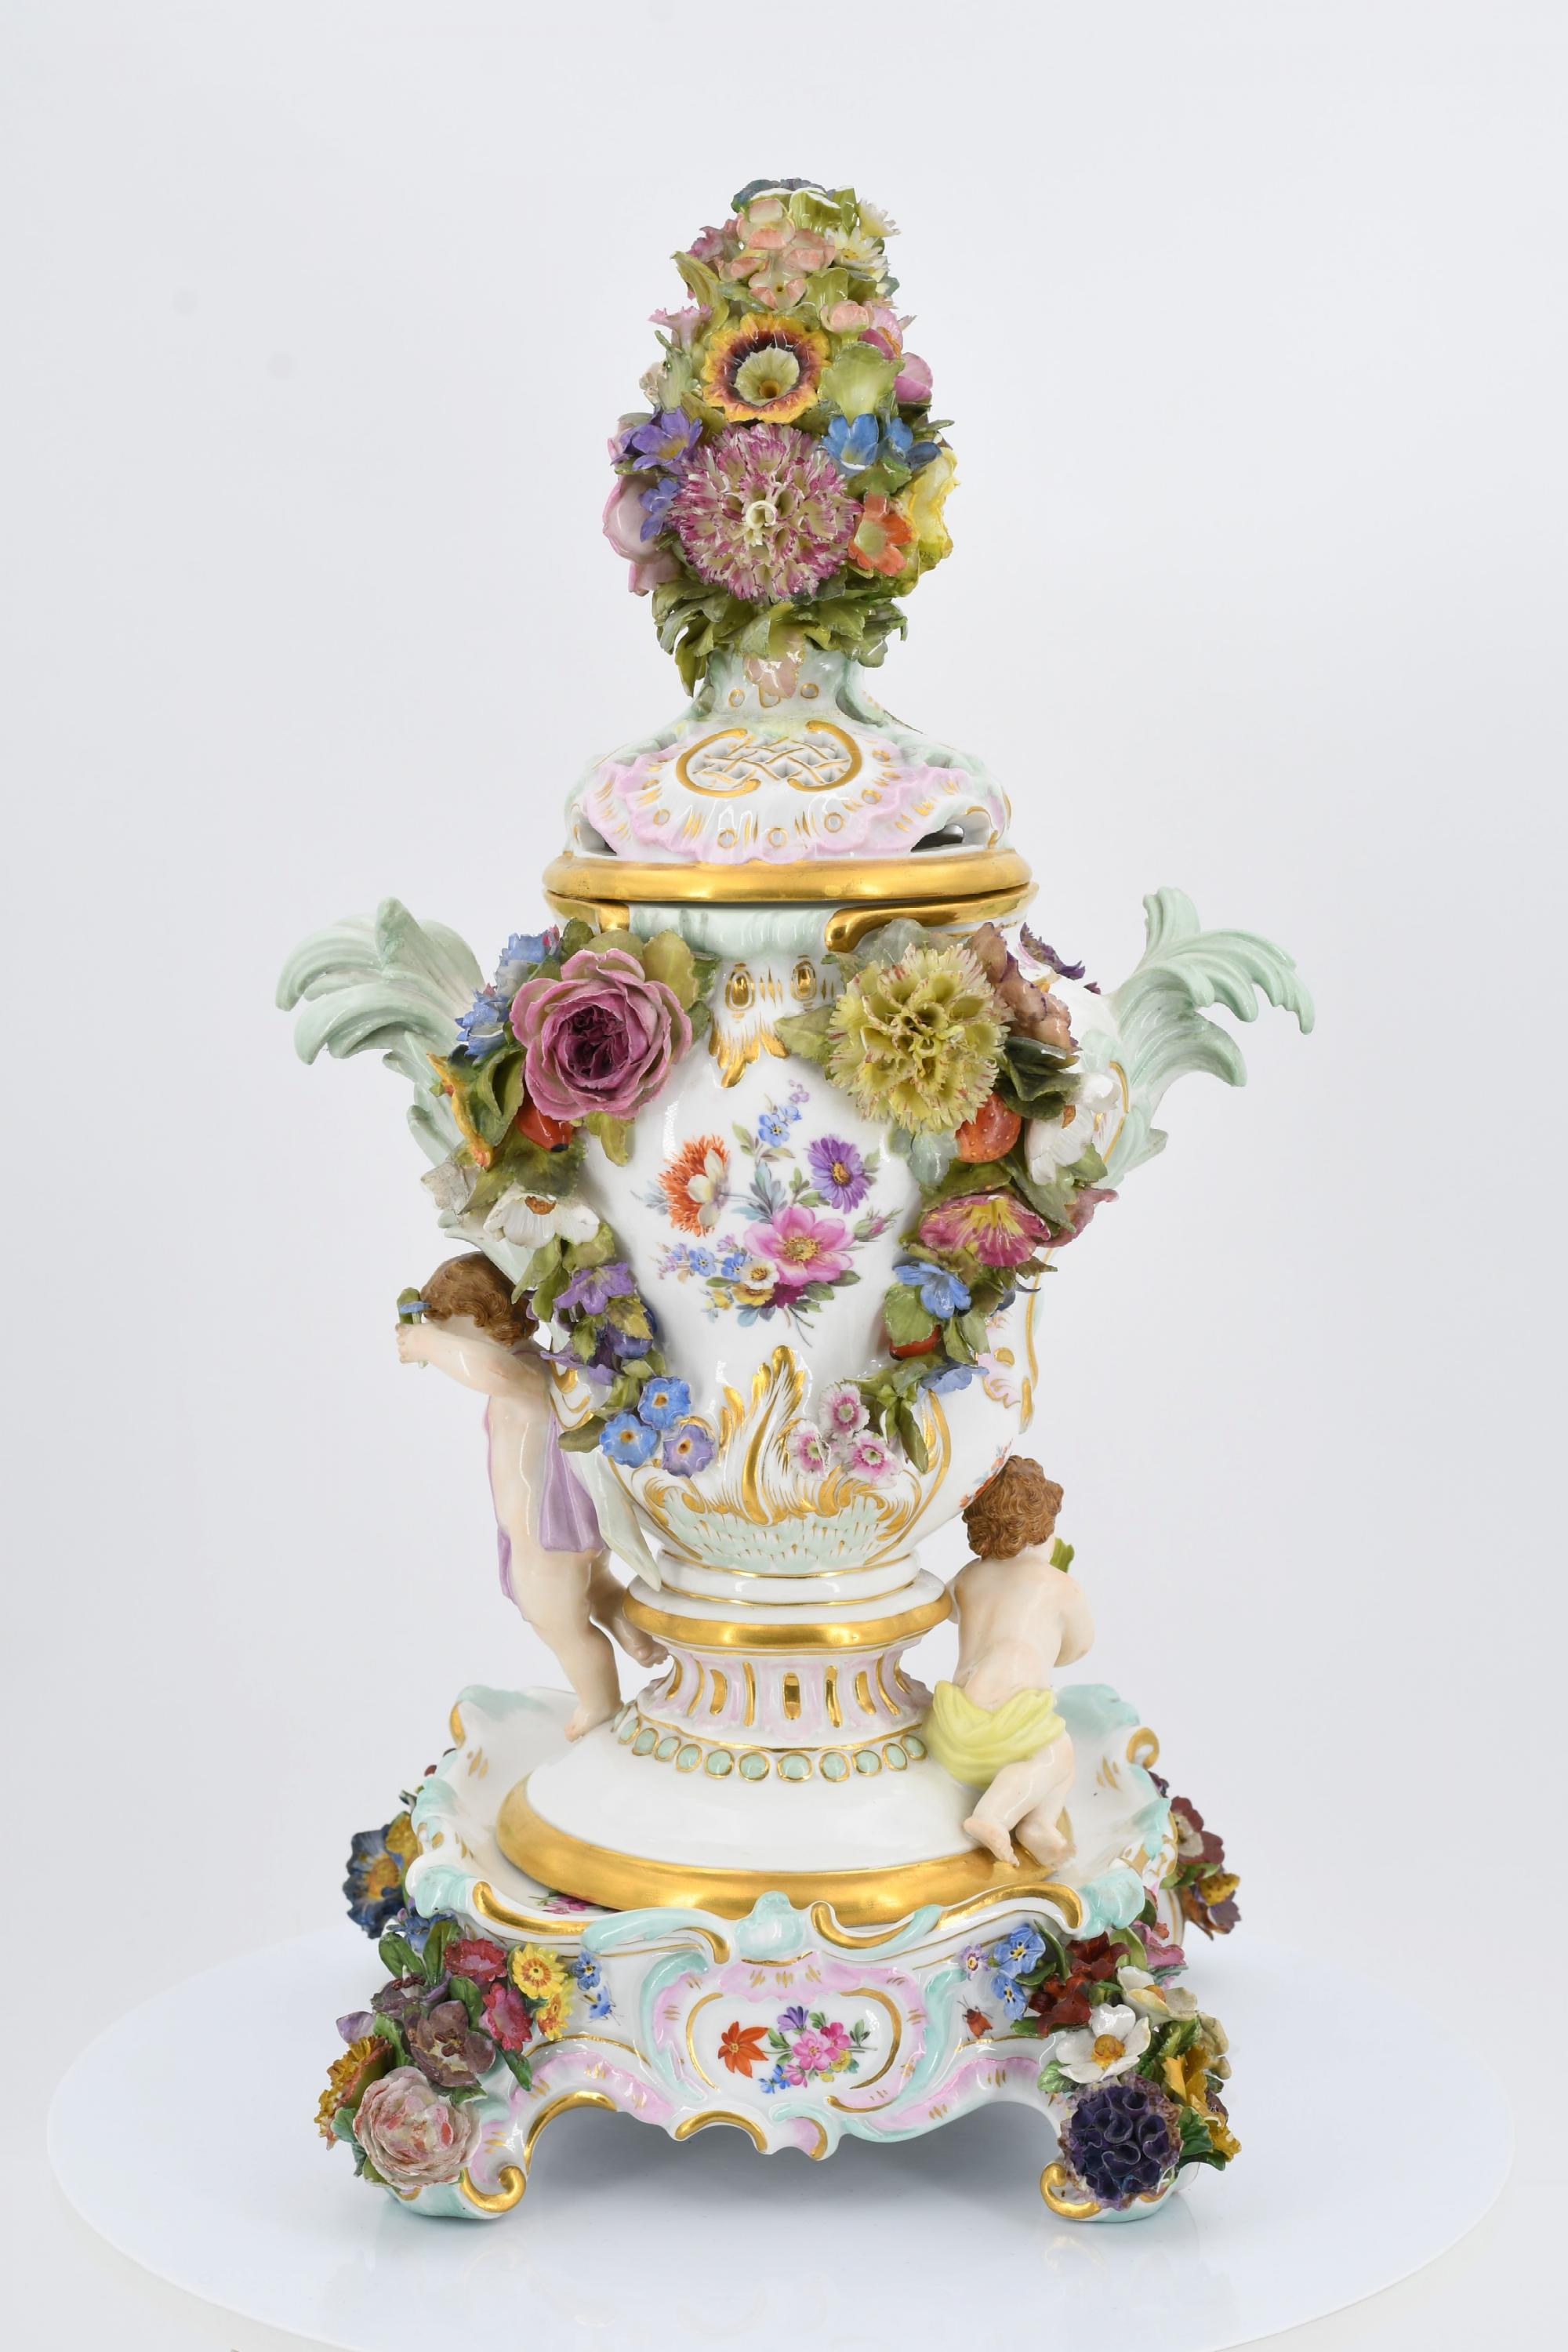 Small potpourri vase on pedestal - Image 4 of 9